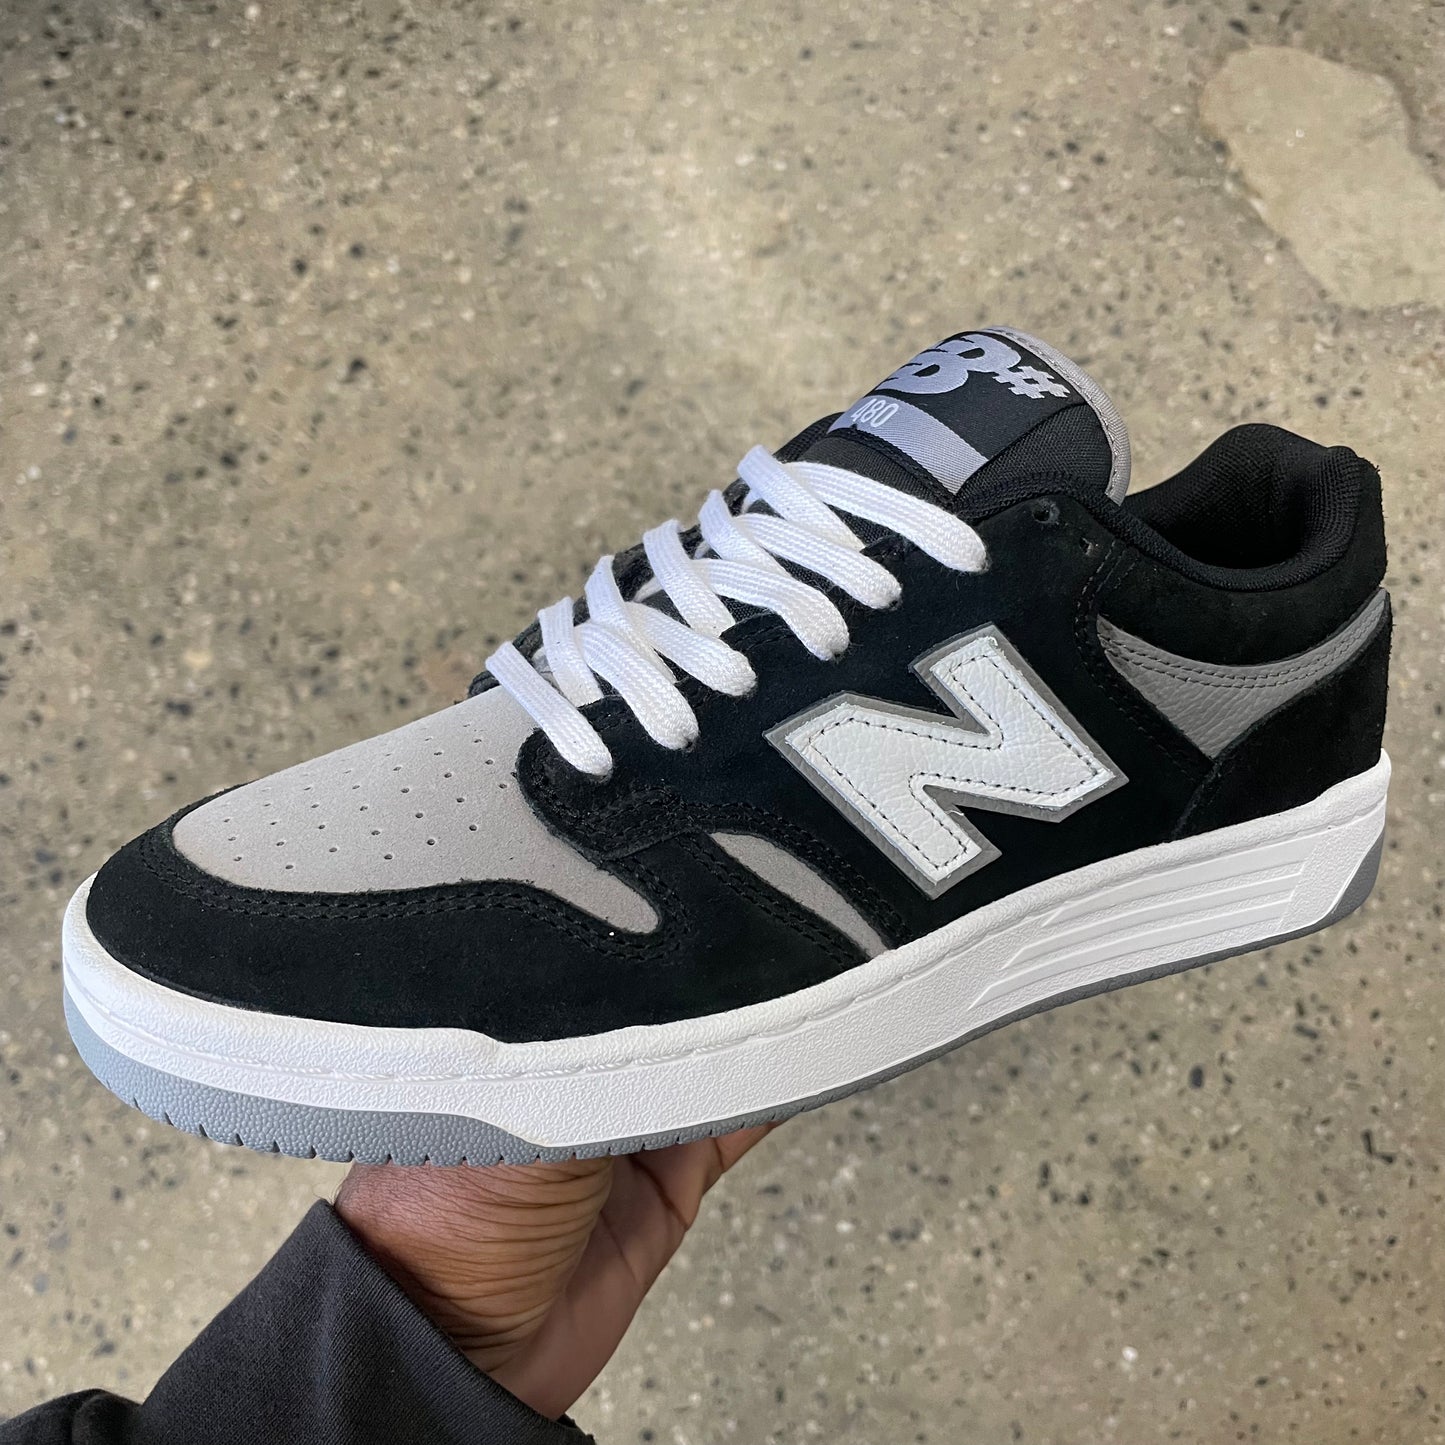 New Balance NB 480 - Black/Grey